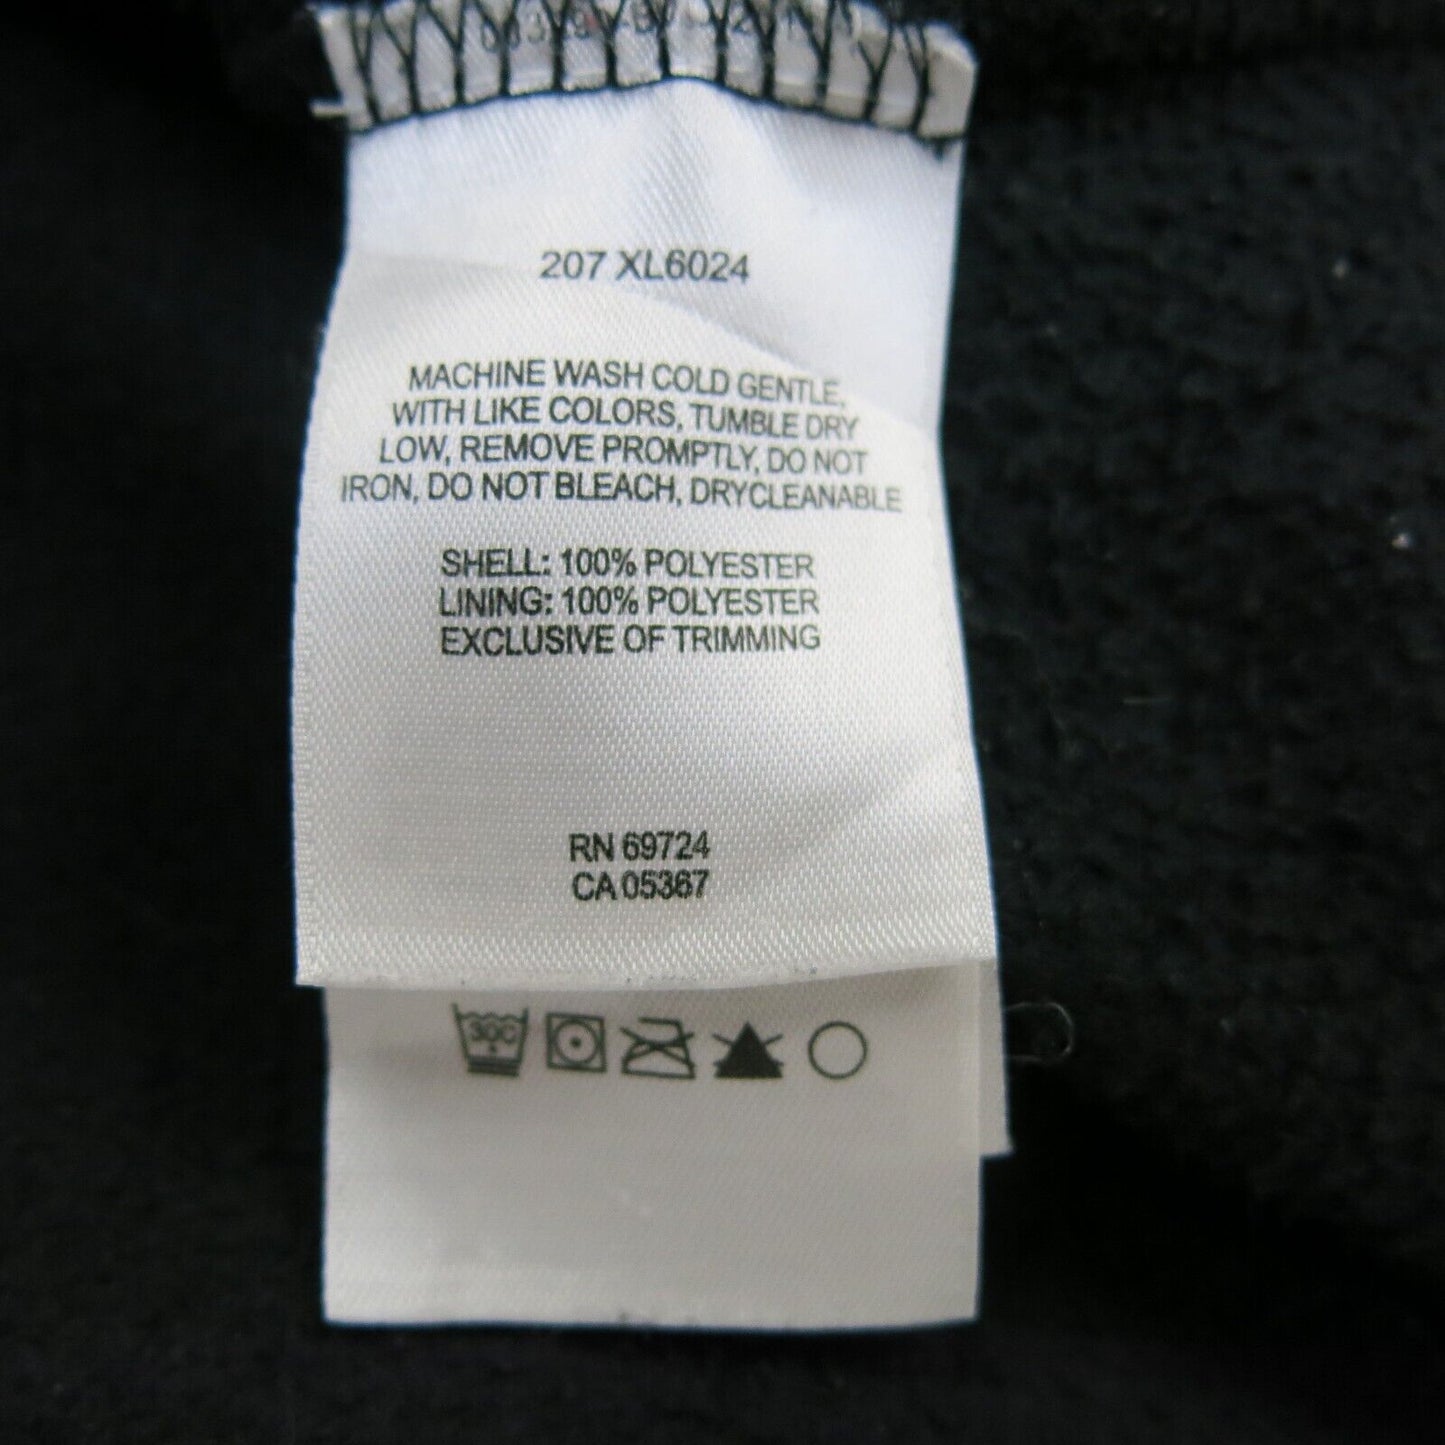 Columbia Womens Fleece Jacket Full Zip Long Sleeve Mock Neck Logo Black Size XL